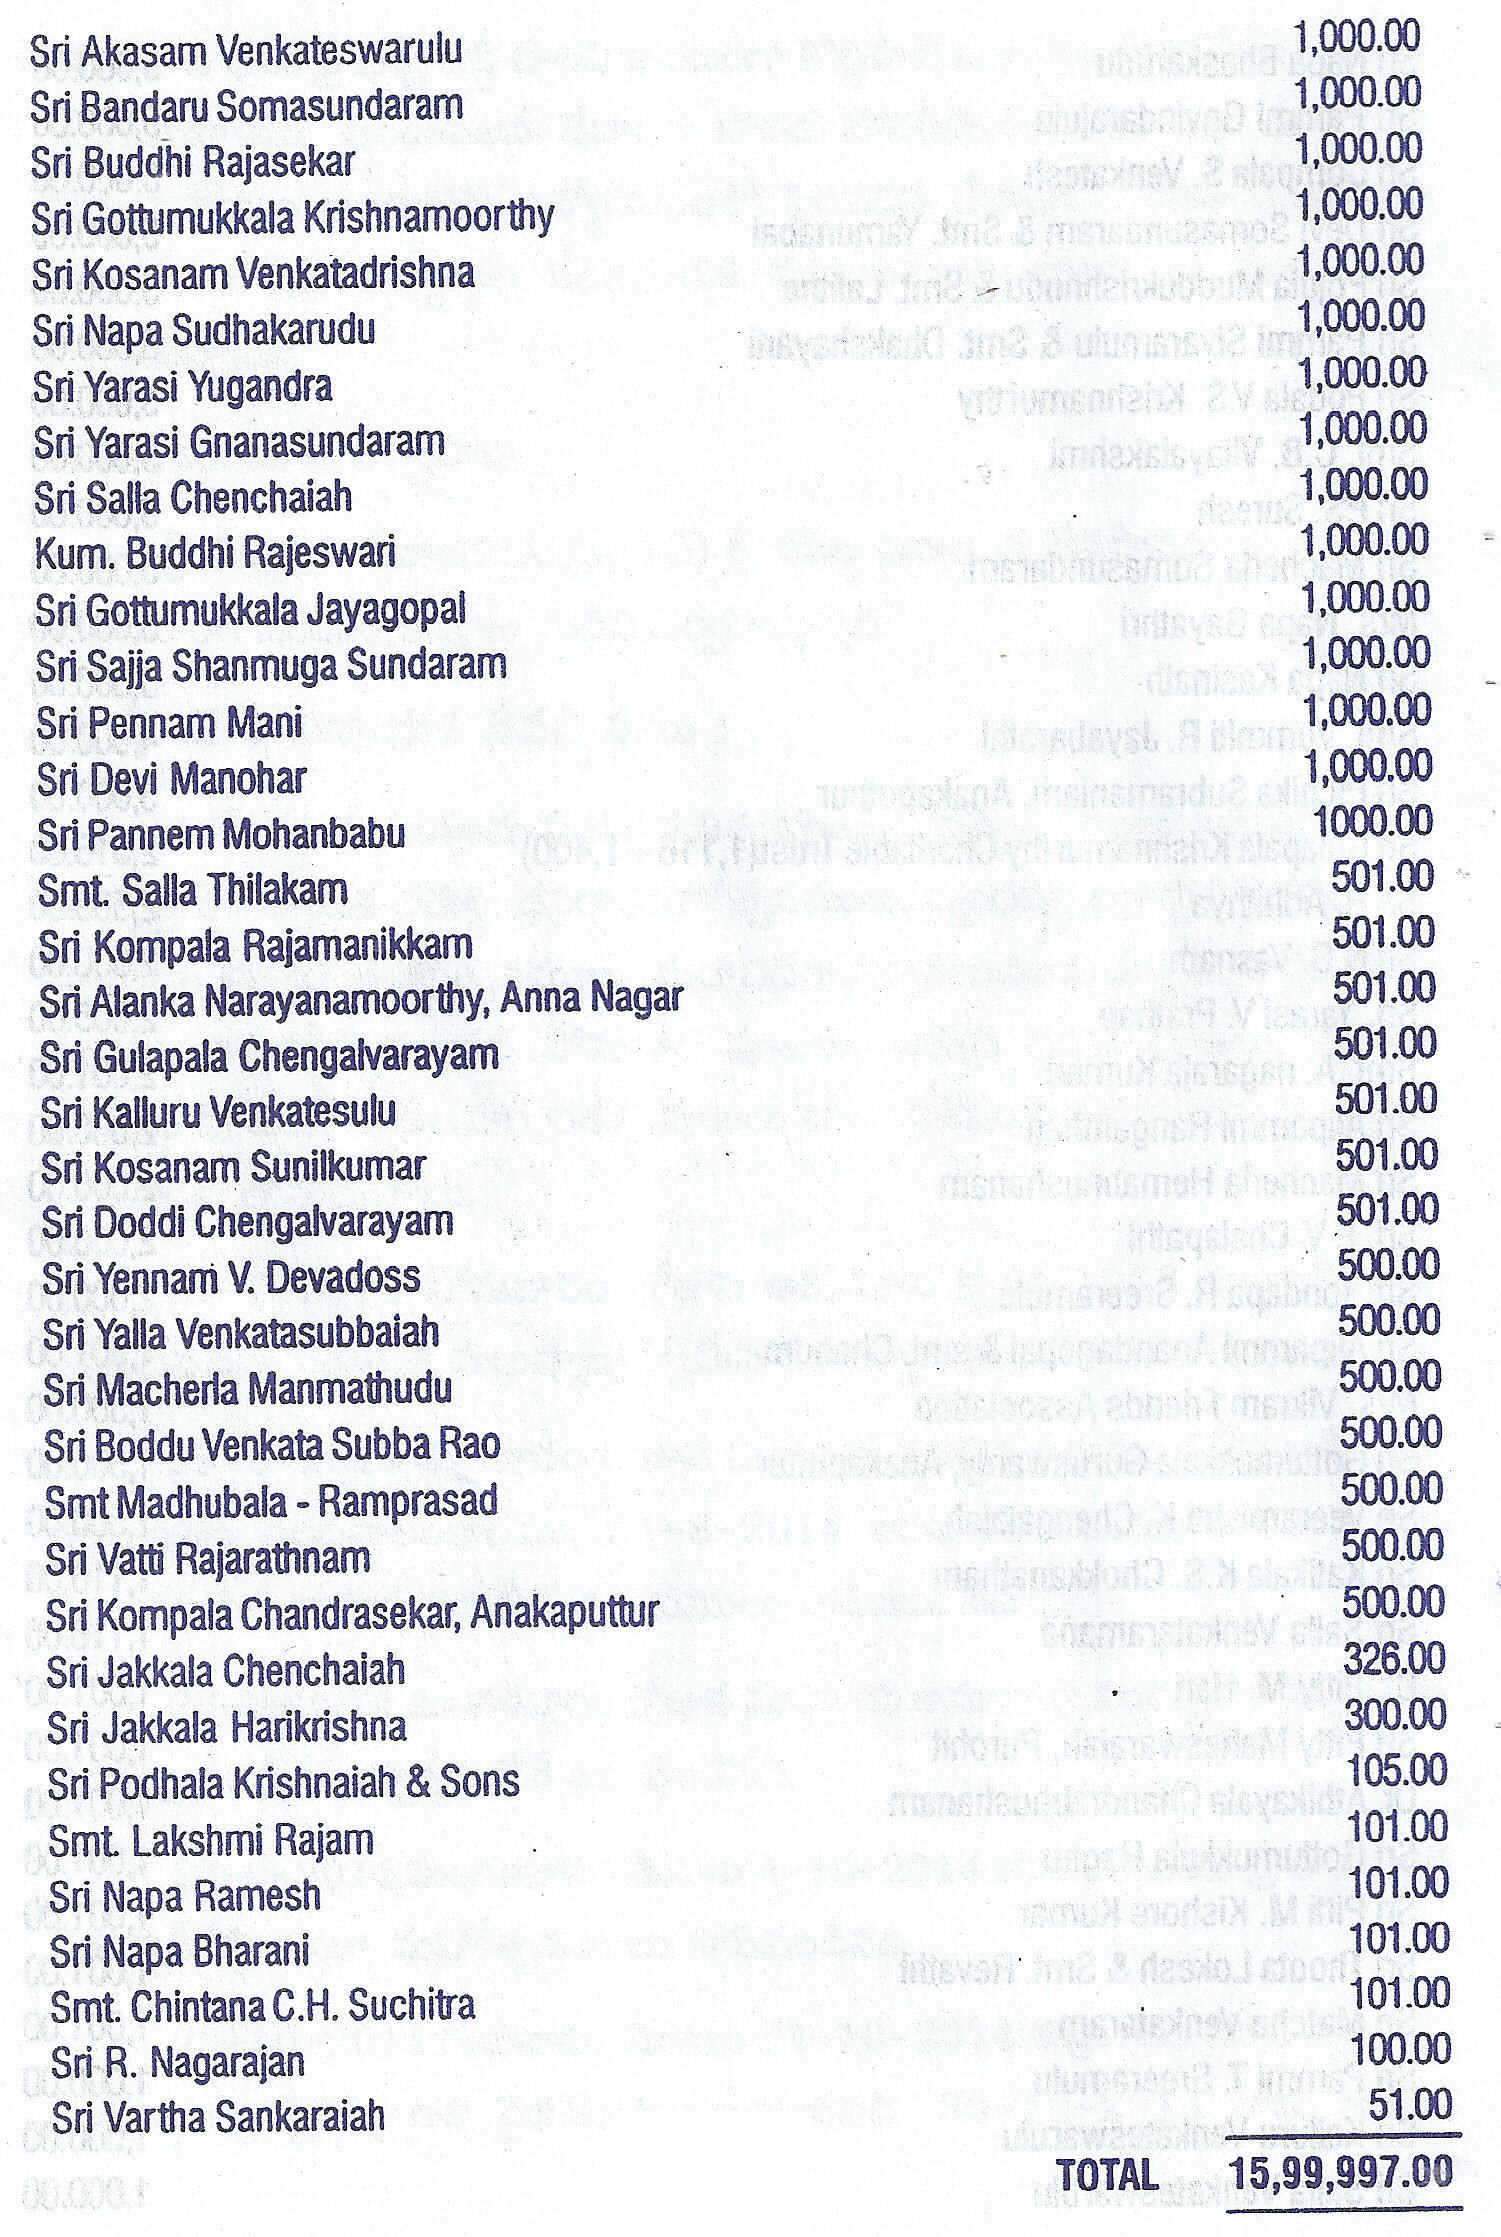 devanga educational development fund donors list